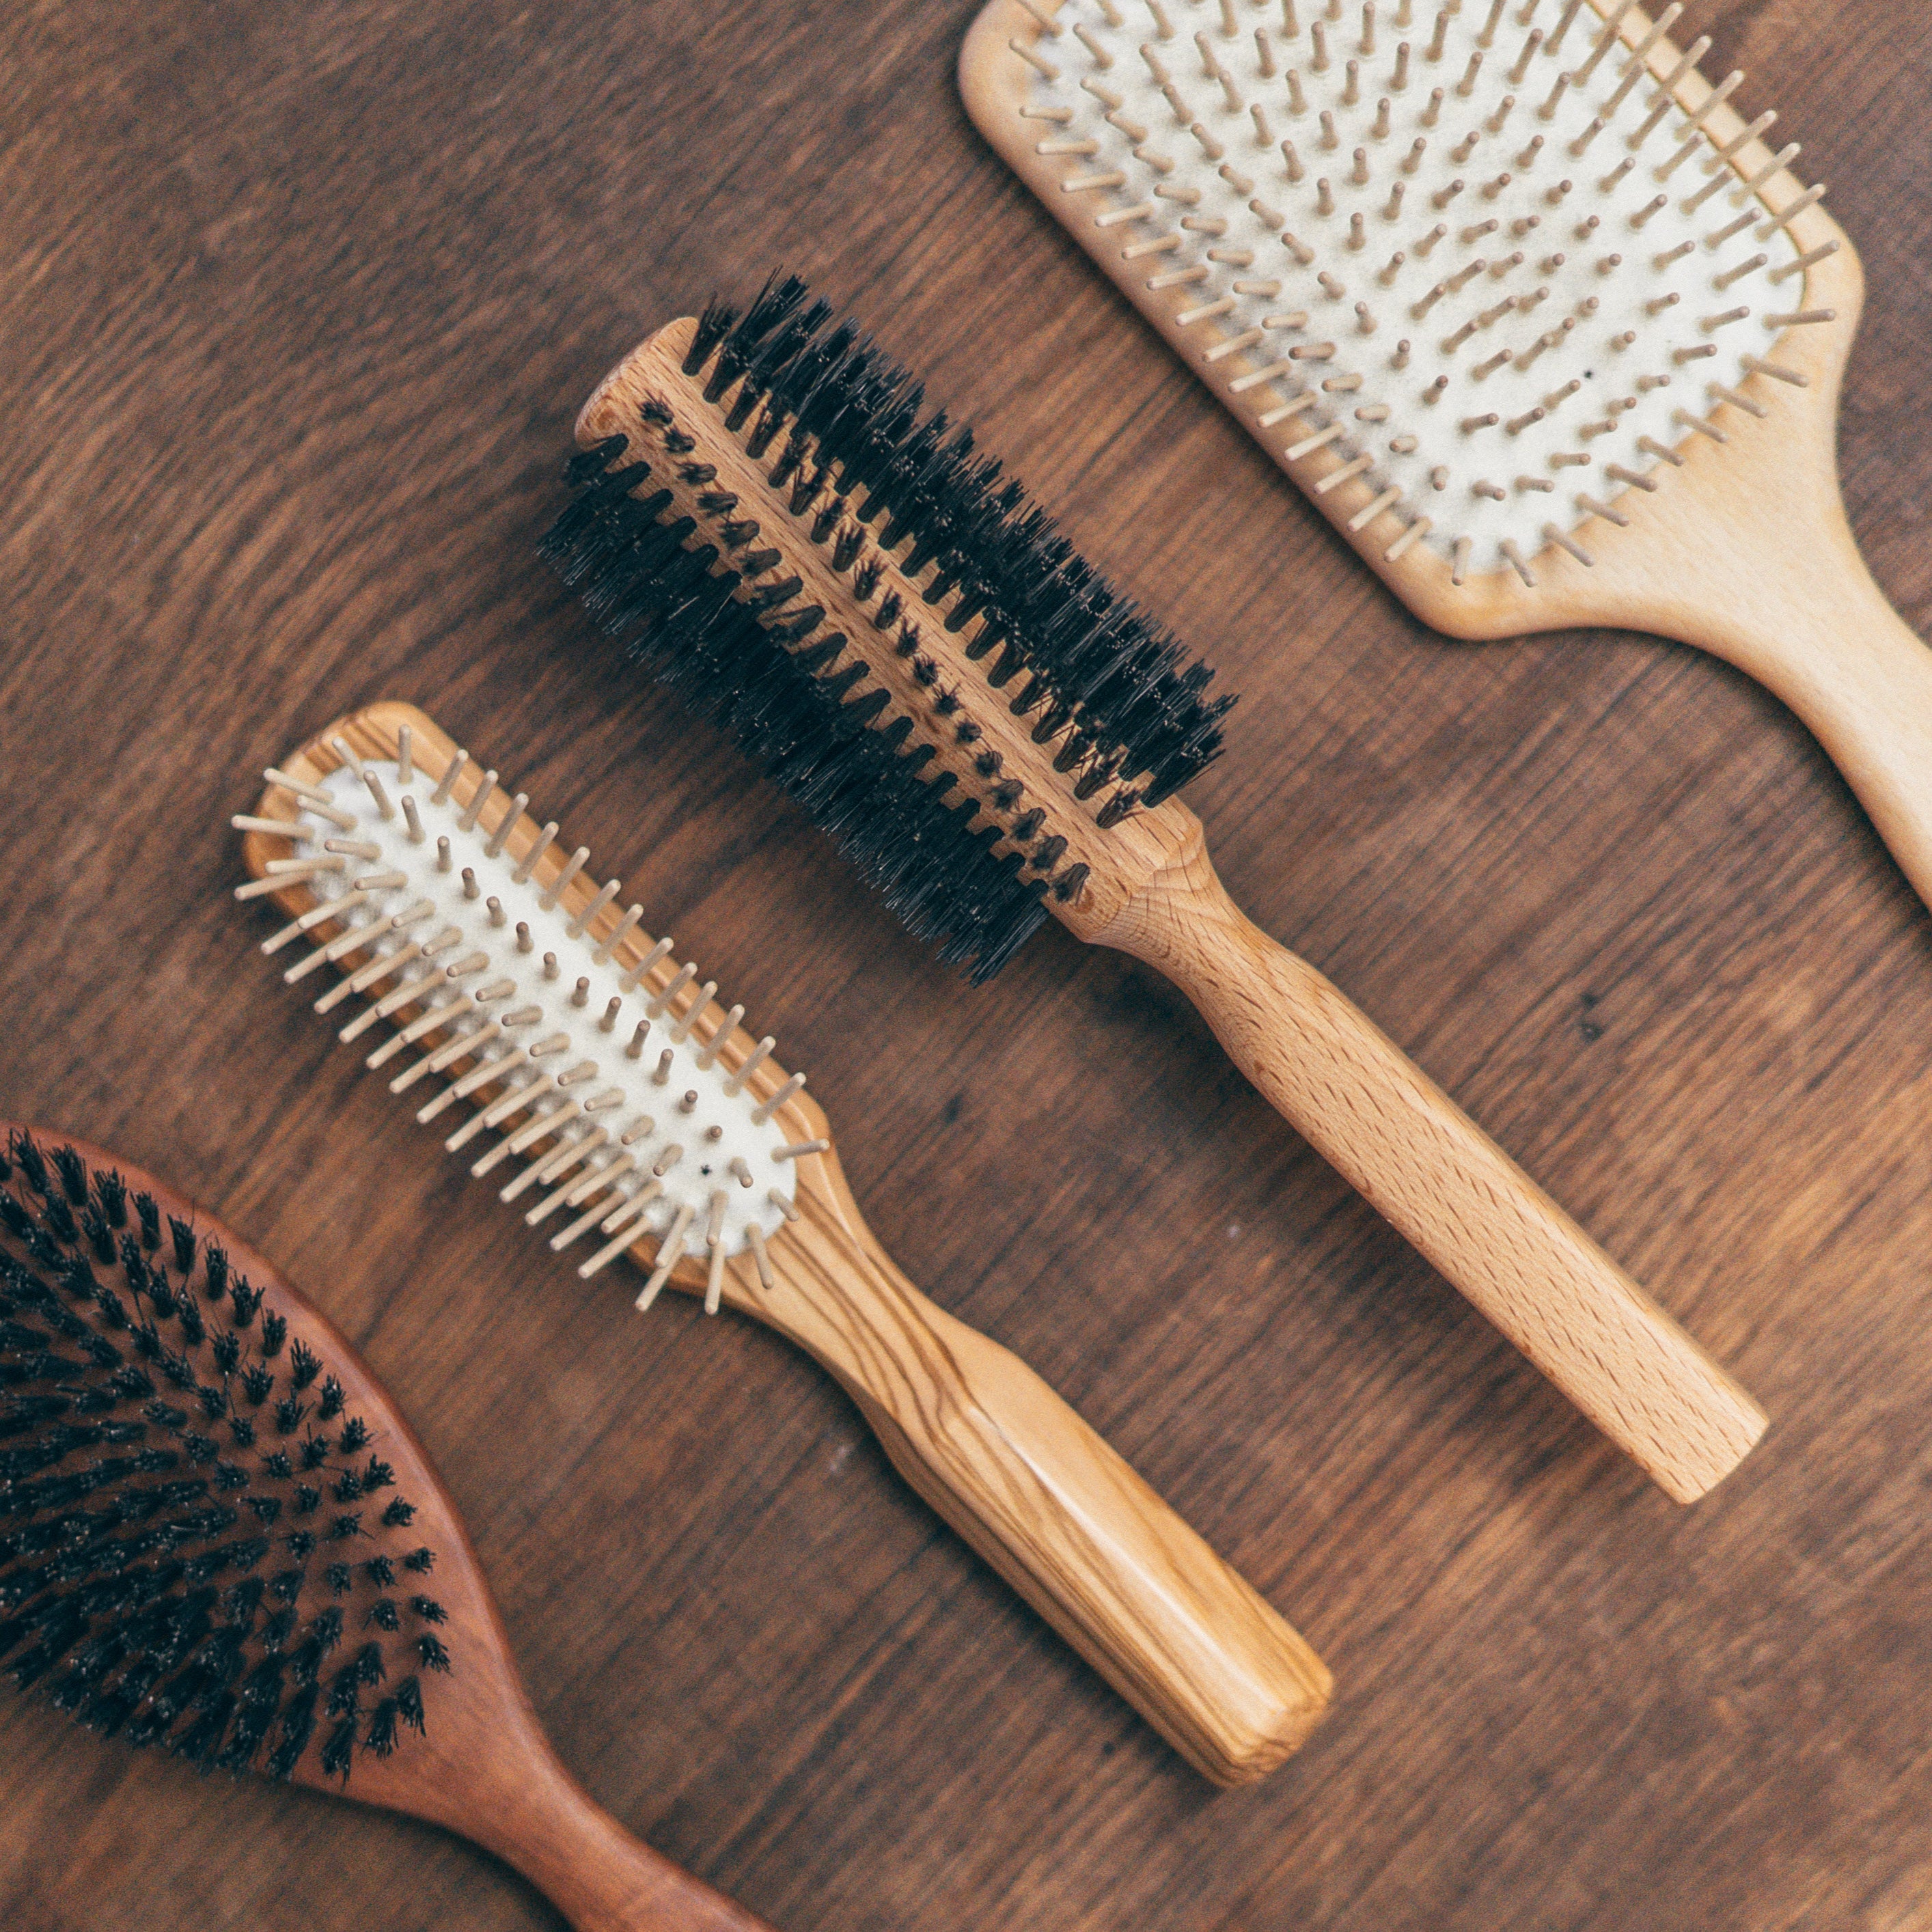 Soft Bristle Wooden Hair Brush